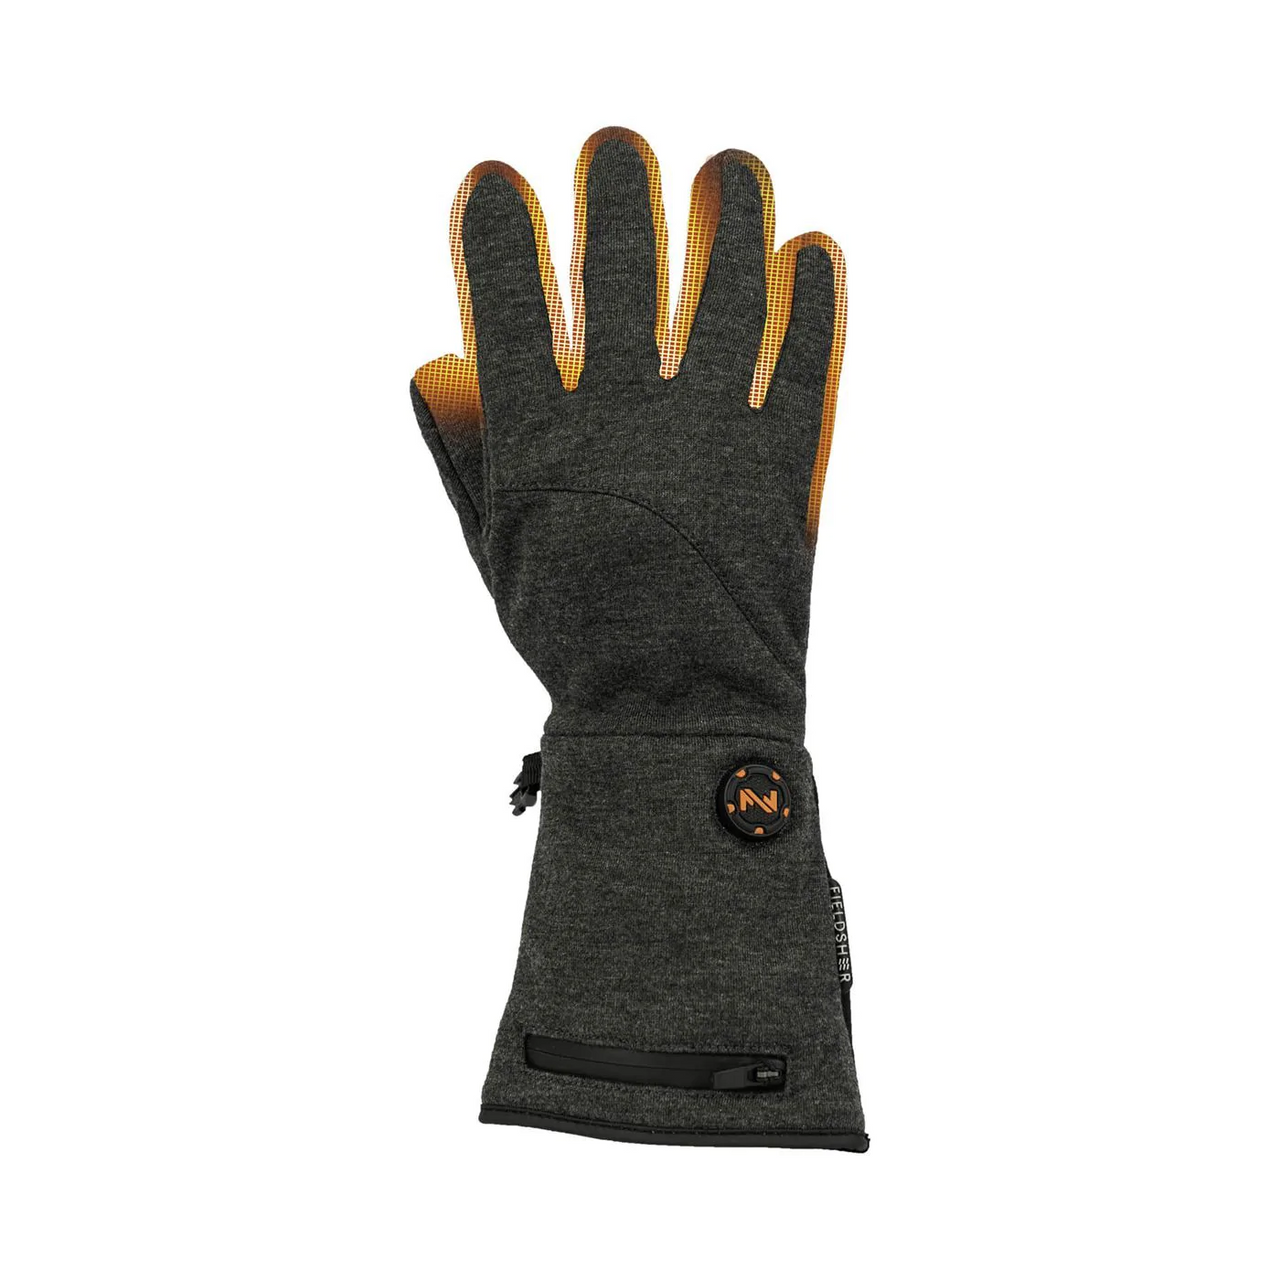 FieldSheer Unisex Thermal Heated Glove (7.4V)